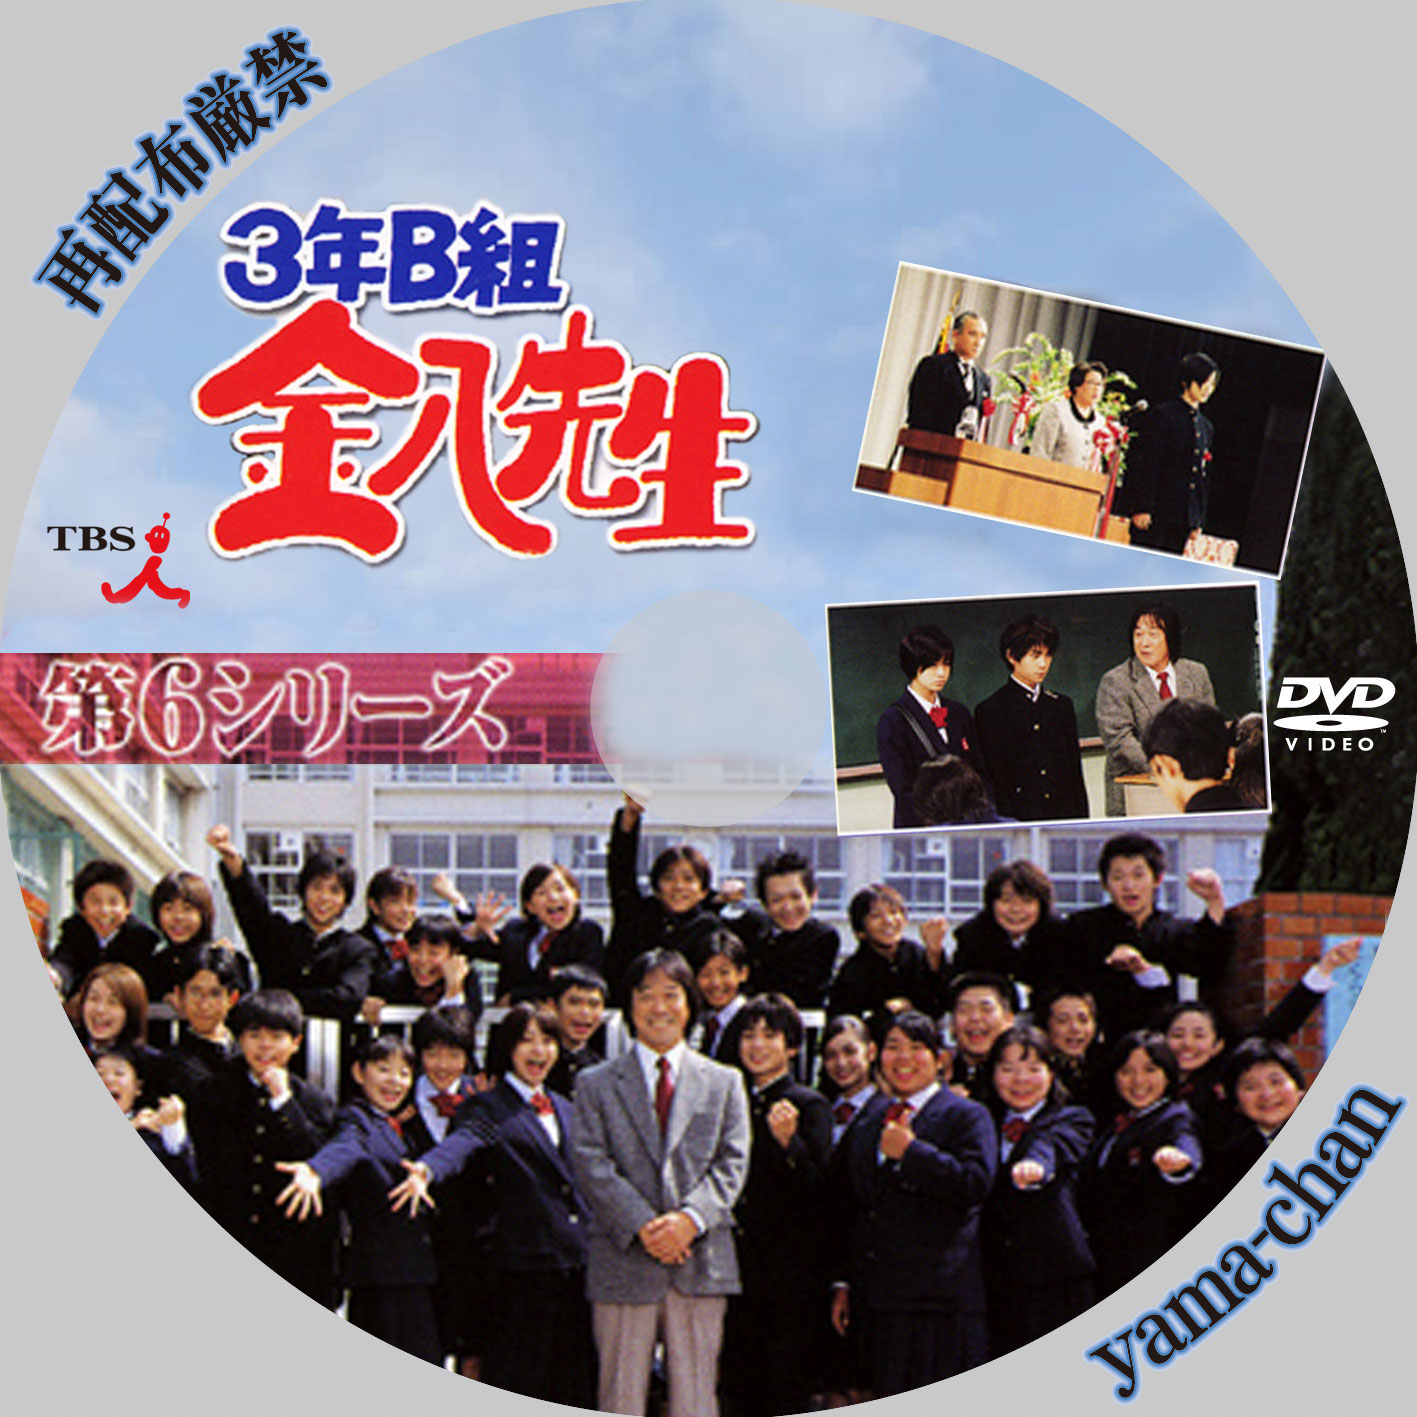 DVD 3年B組金八先生 第5シリーズ DVD-BOX - DVD